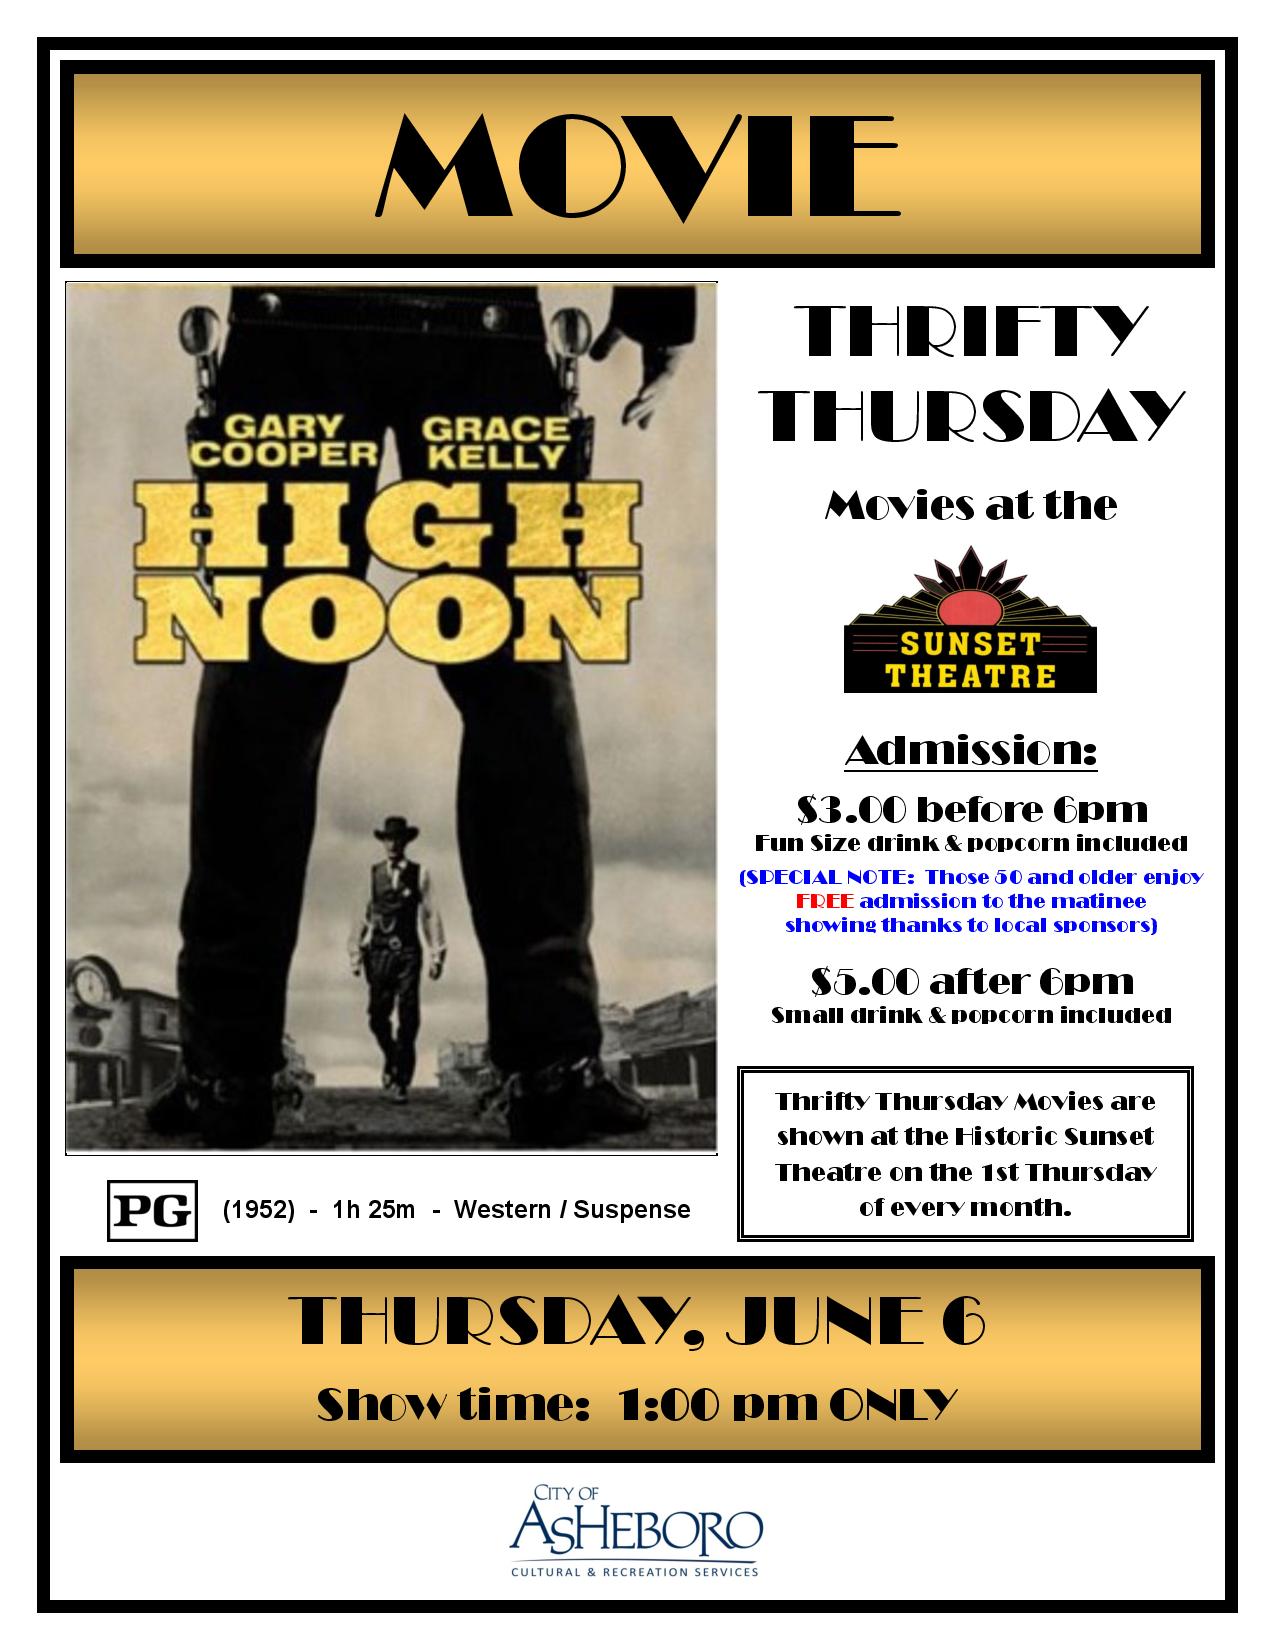 Movie Thrifty Thursday June 6